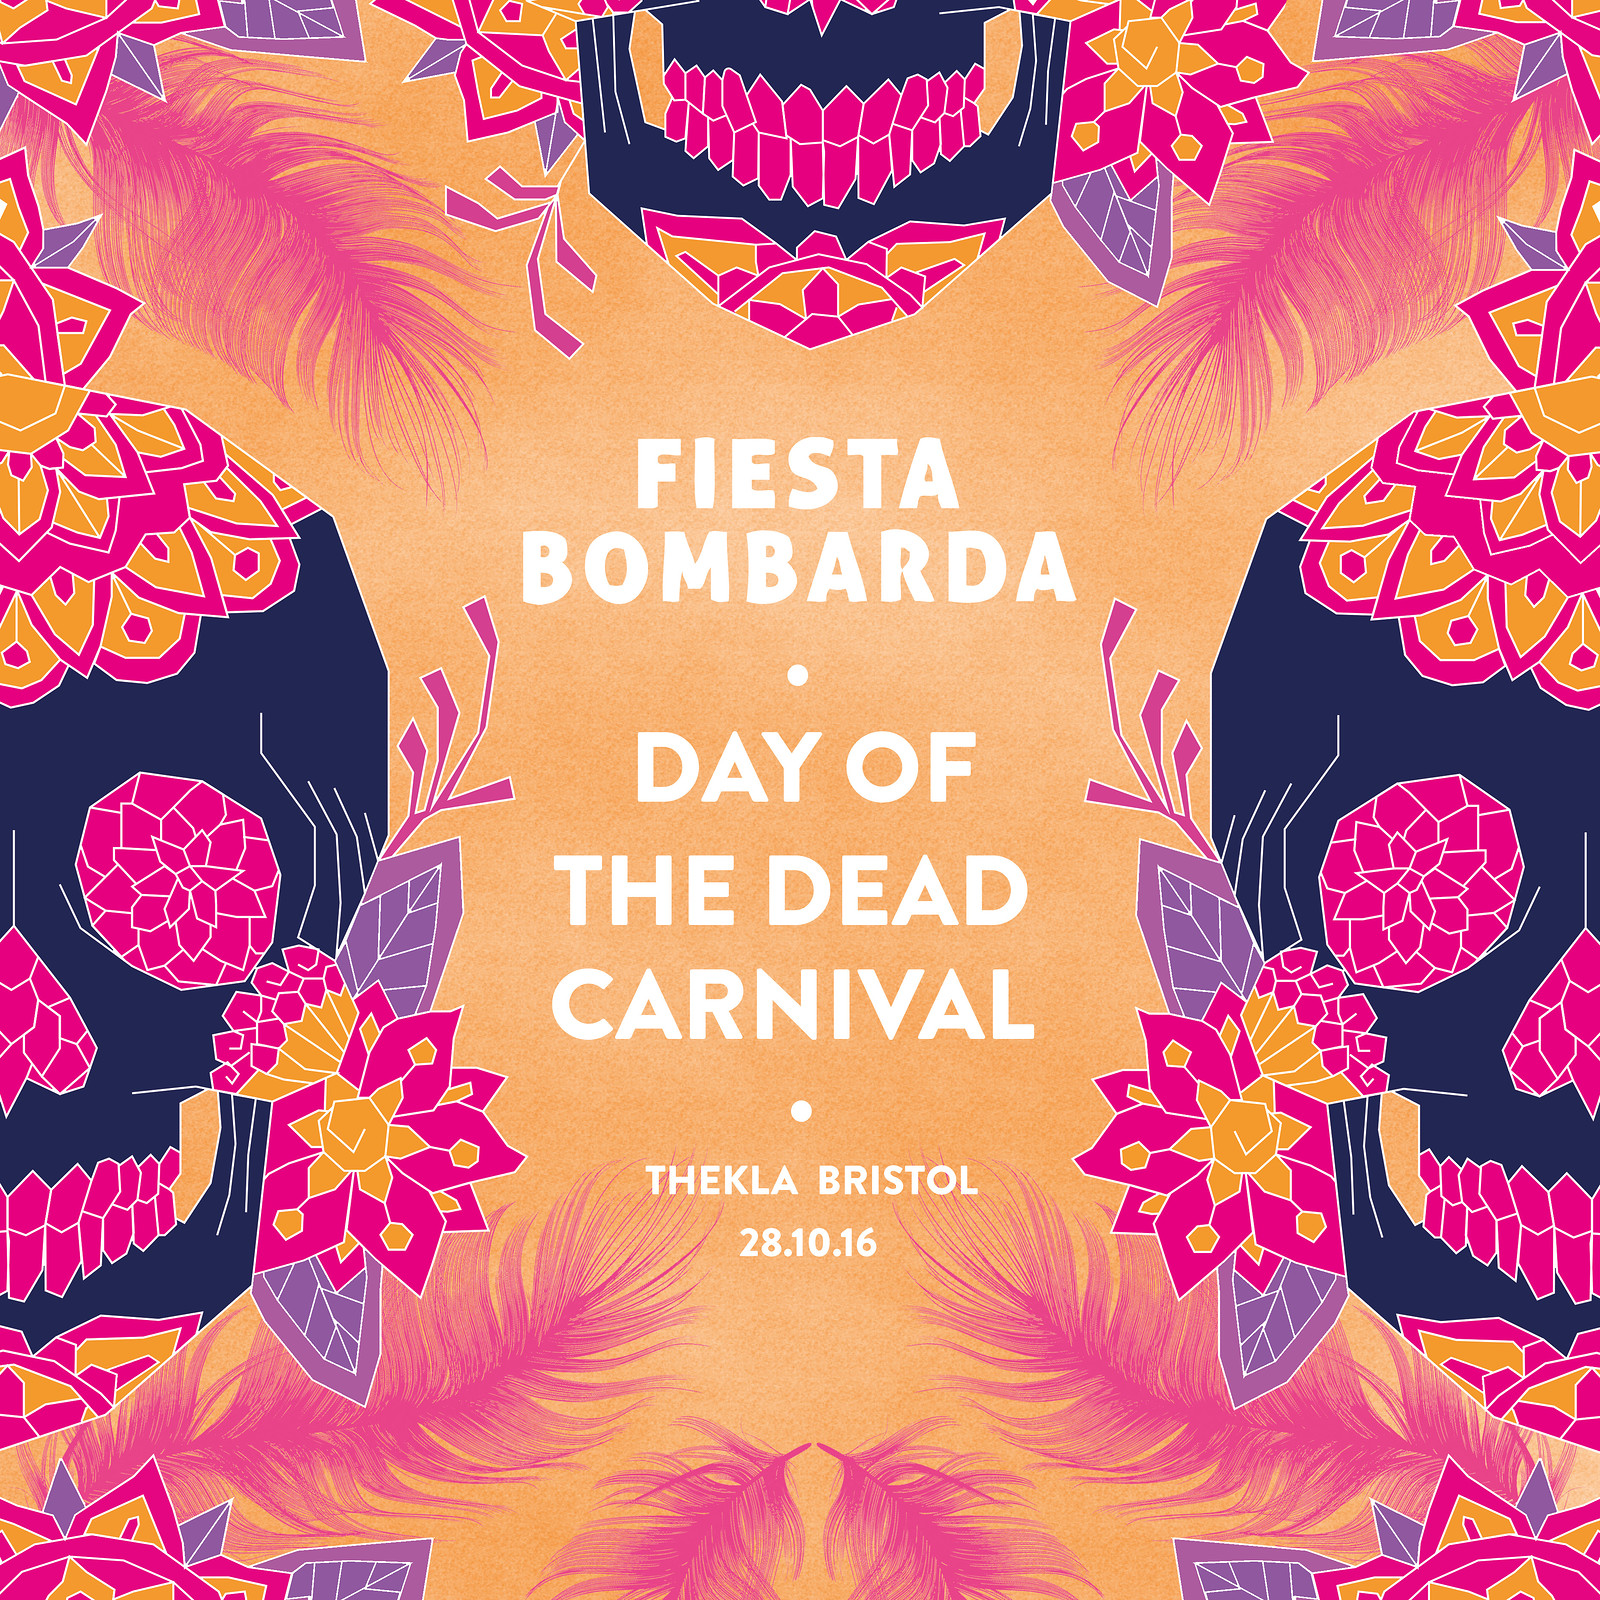 Fiesta Bombarda - Day of the Dead Carnival at Thekla